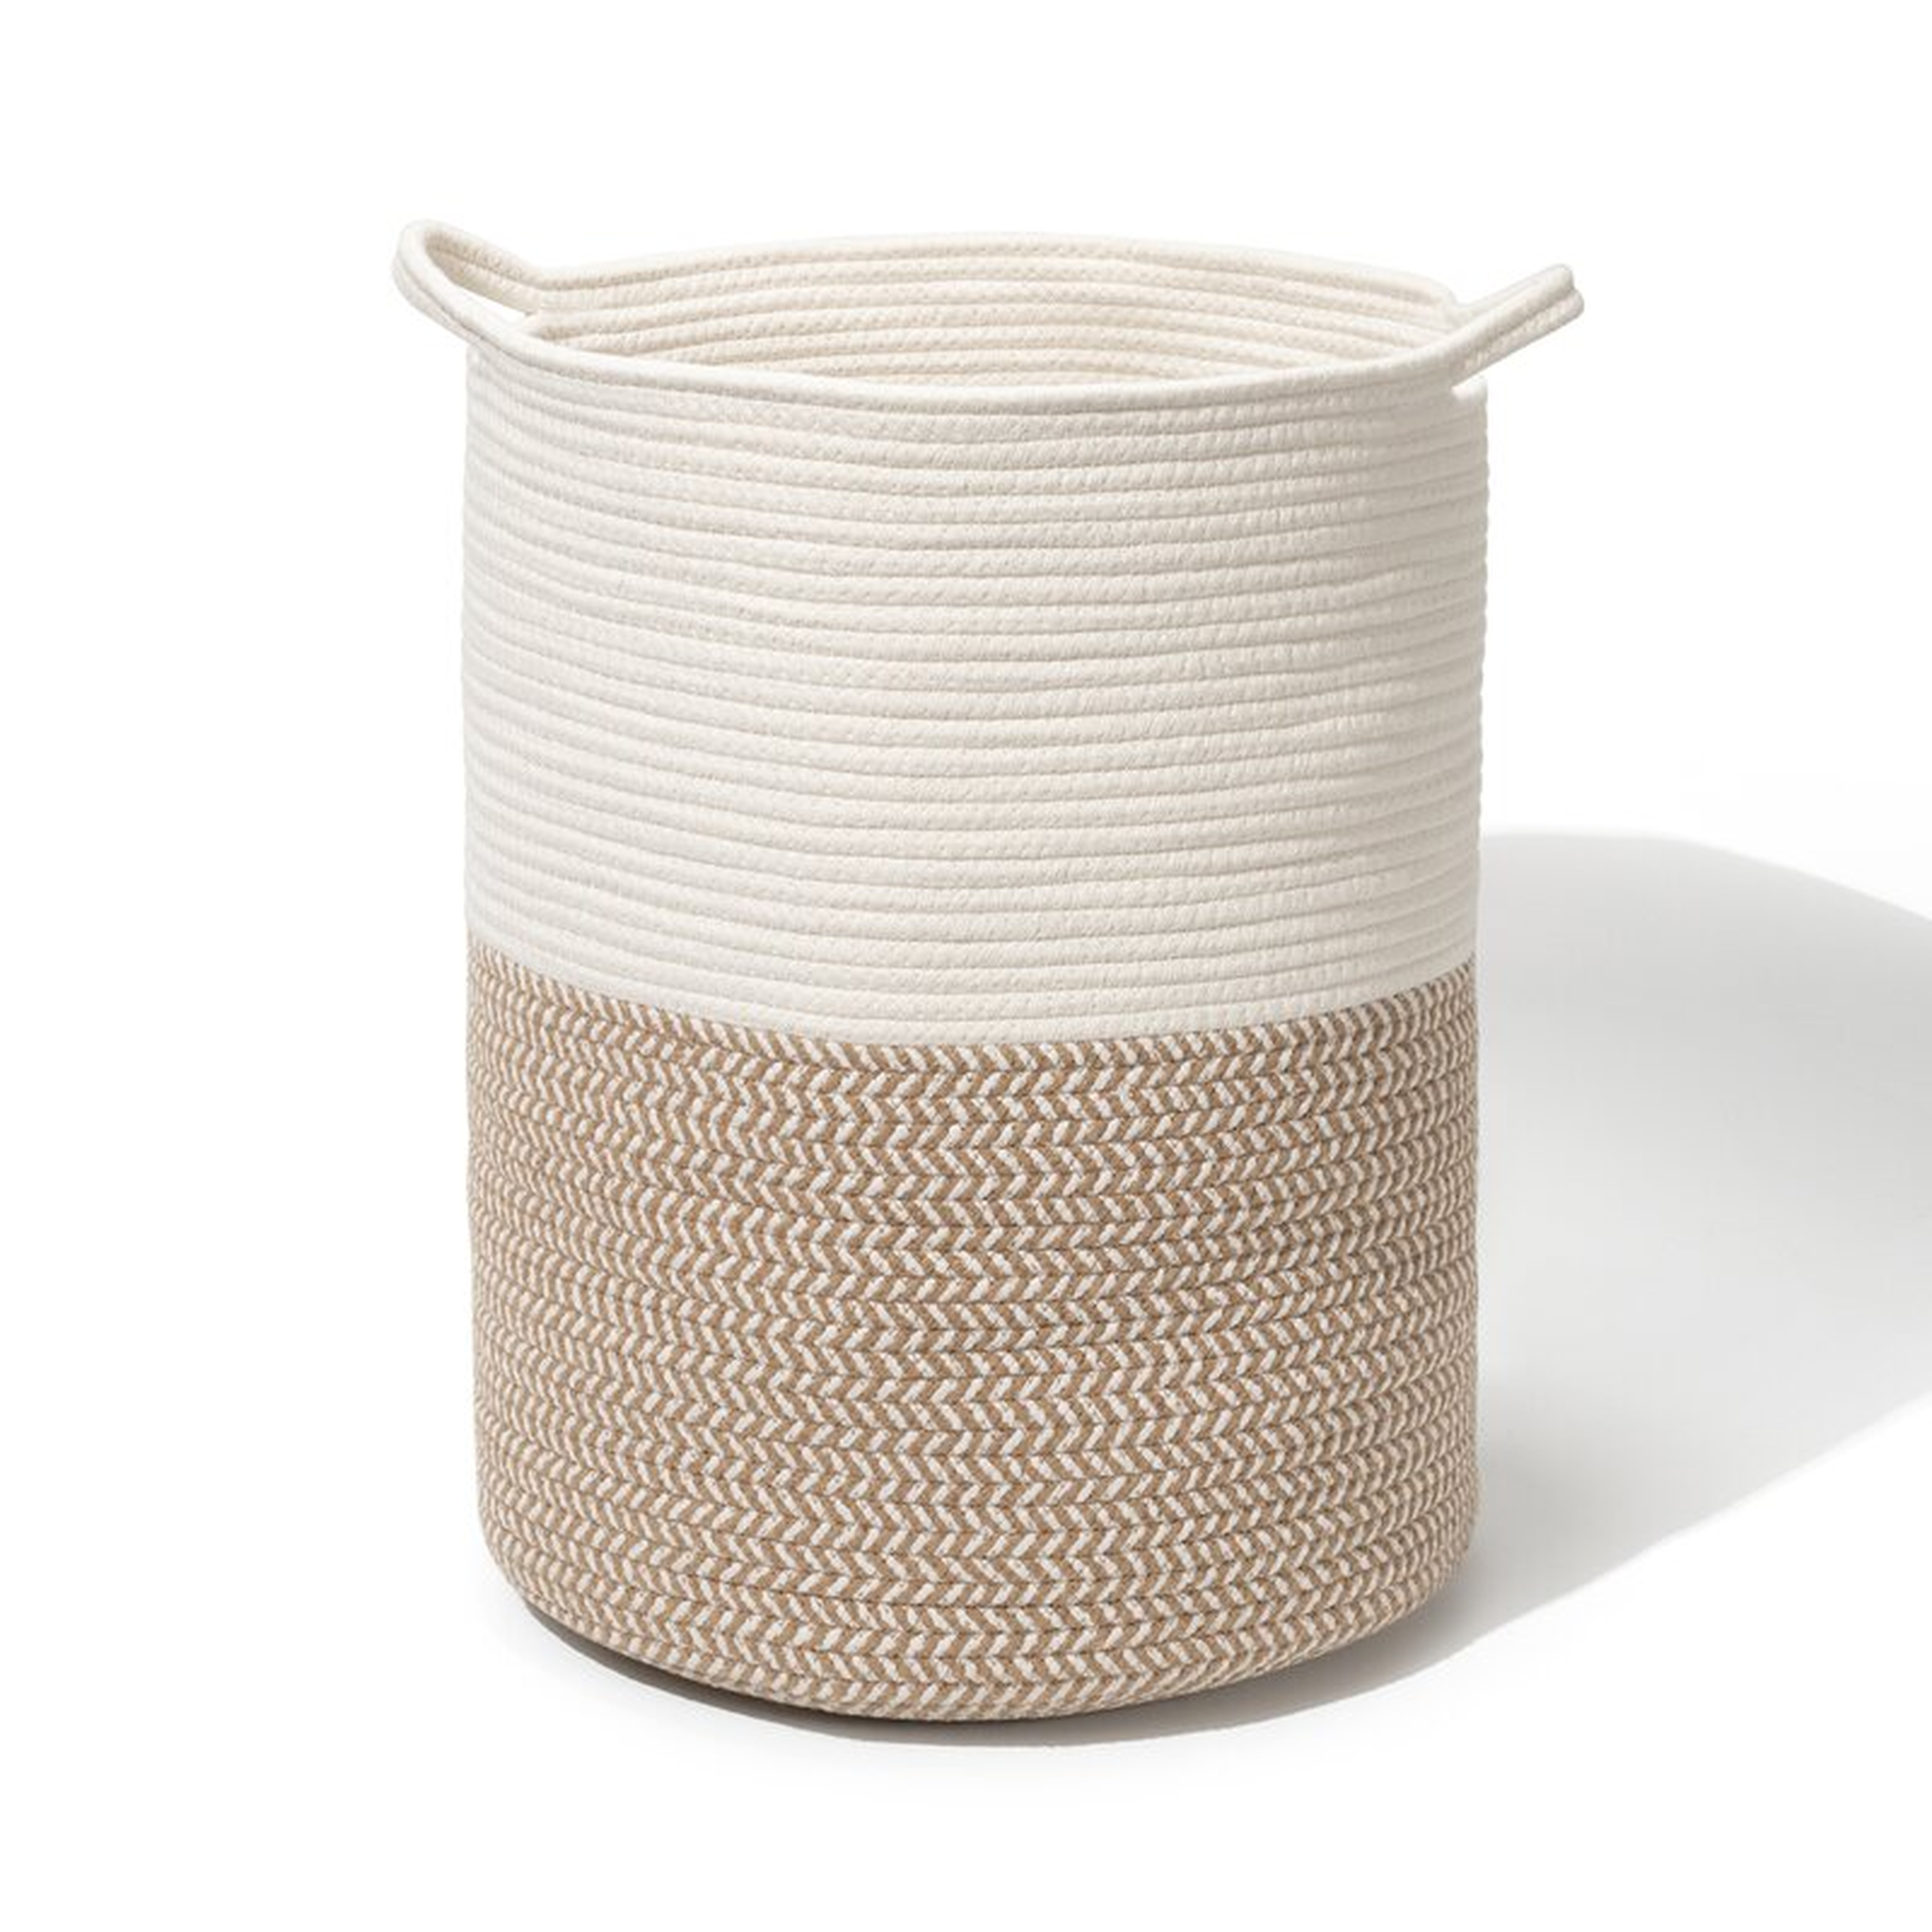 Fabric Laundry Basket with Handles - Wayfair